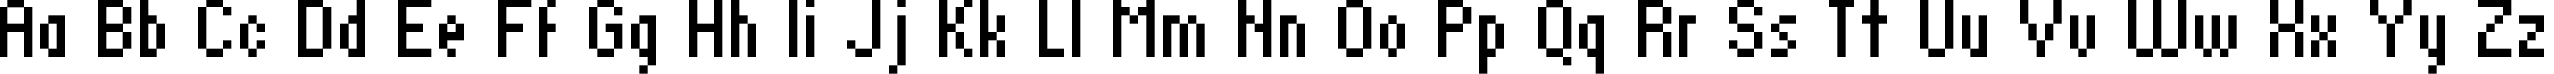 Пример написания английского алфавита шрифтом standard 07_57